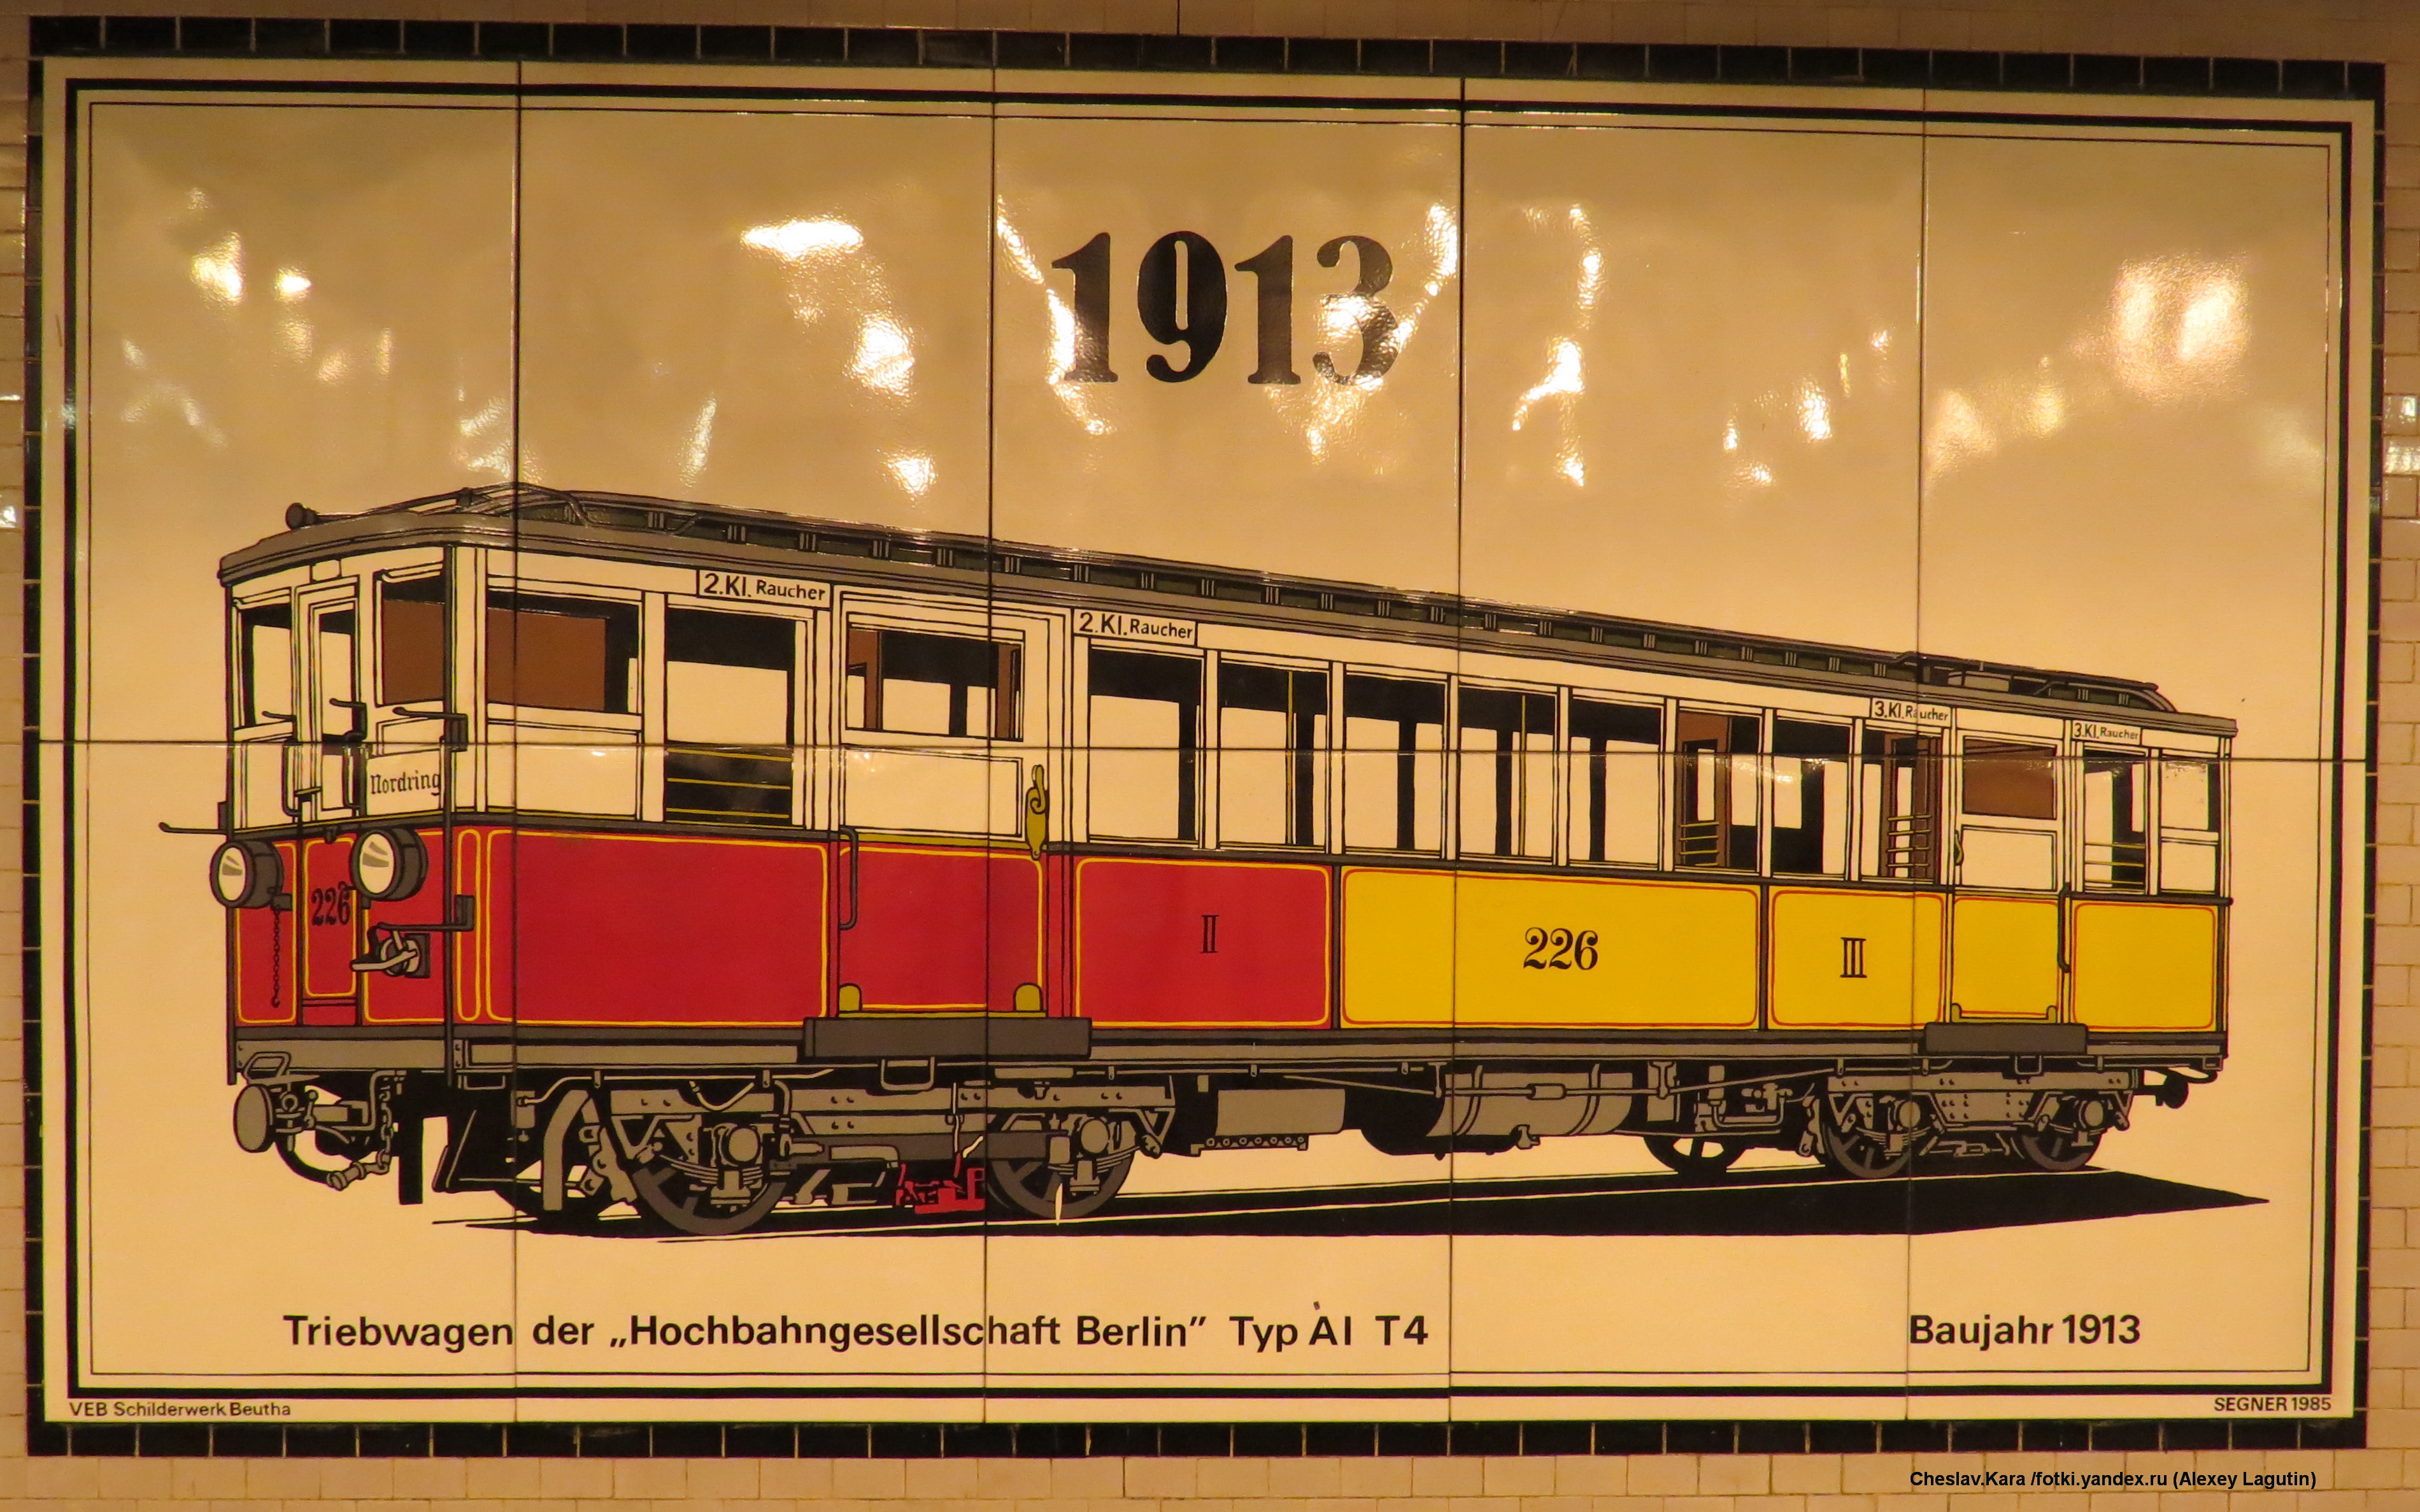 Вагон типа A-I, изображённый на путевой стене станции "Klosterstrasse" берлинского метро.